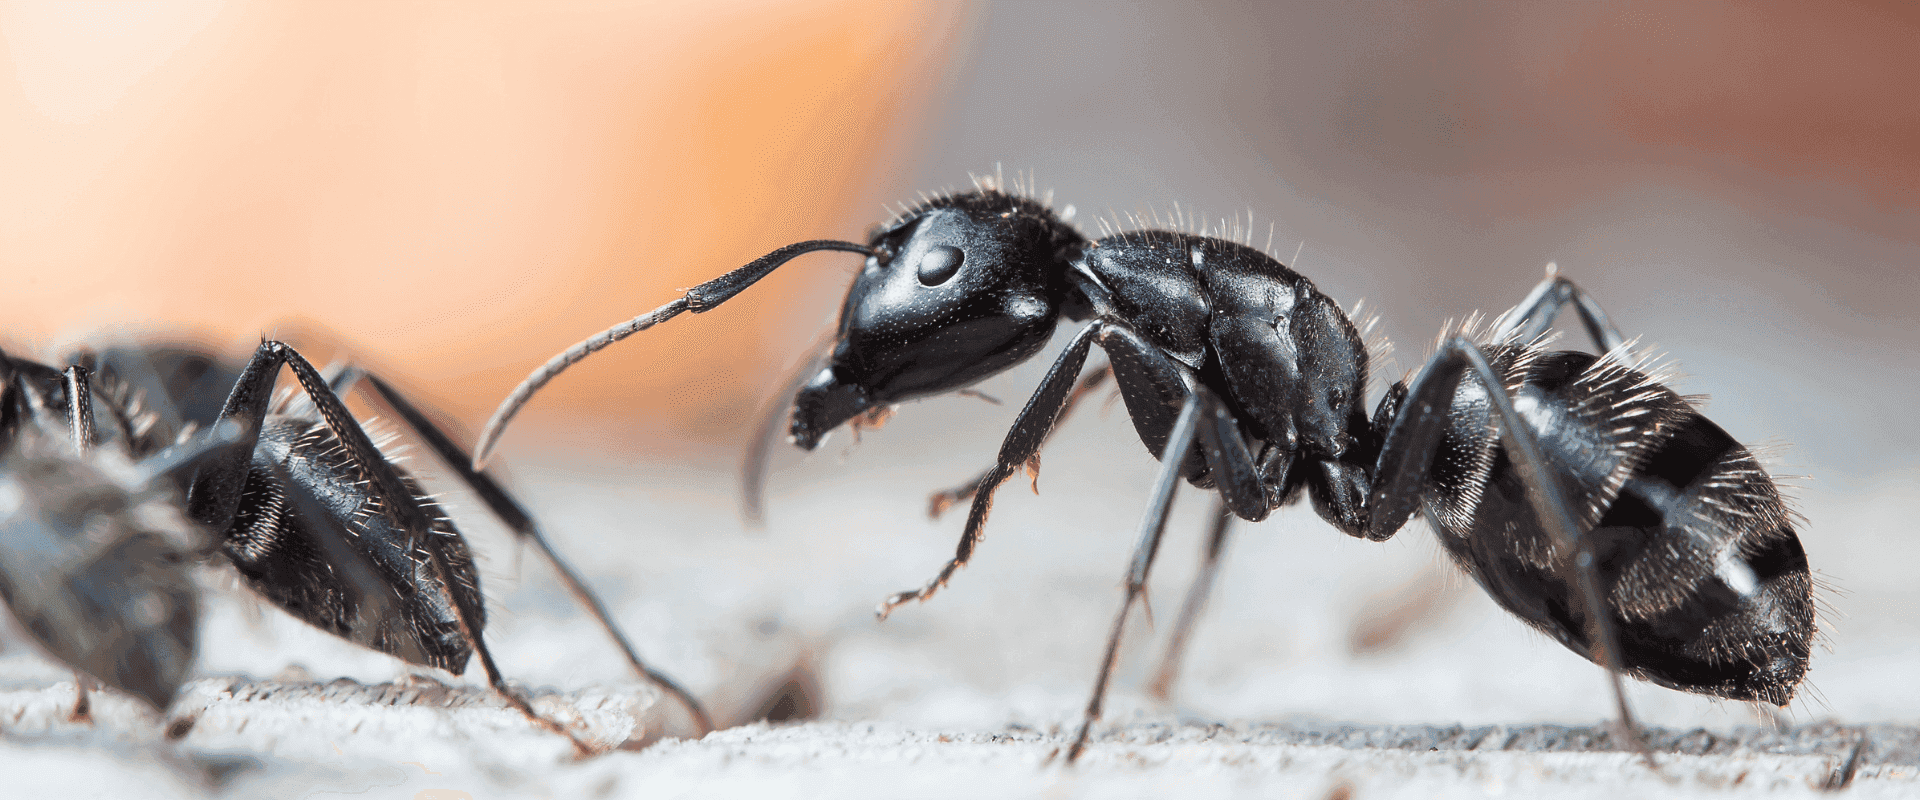 Common ants in Florida